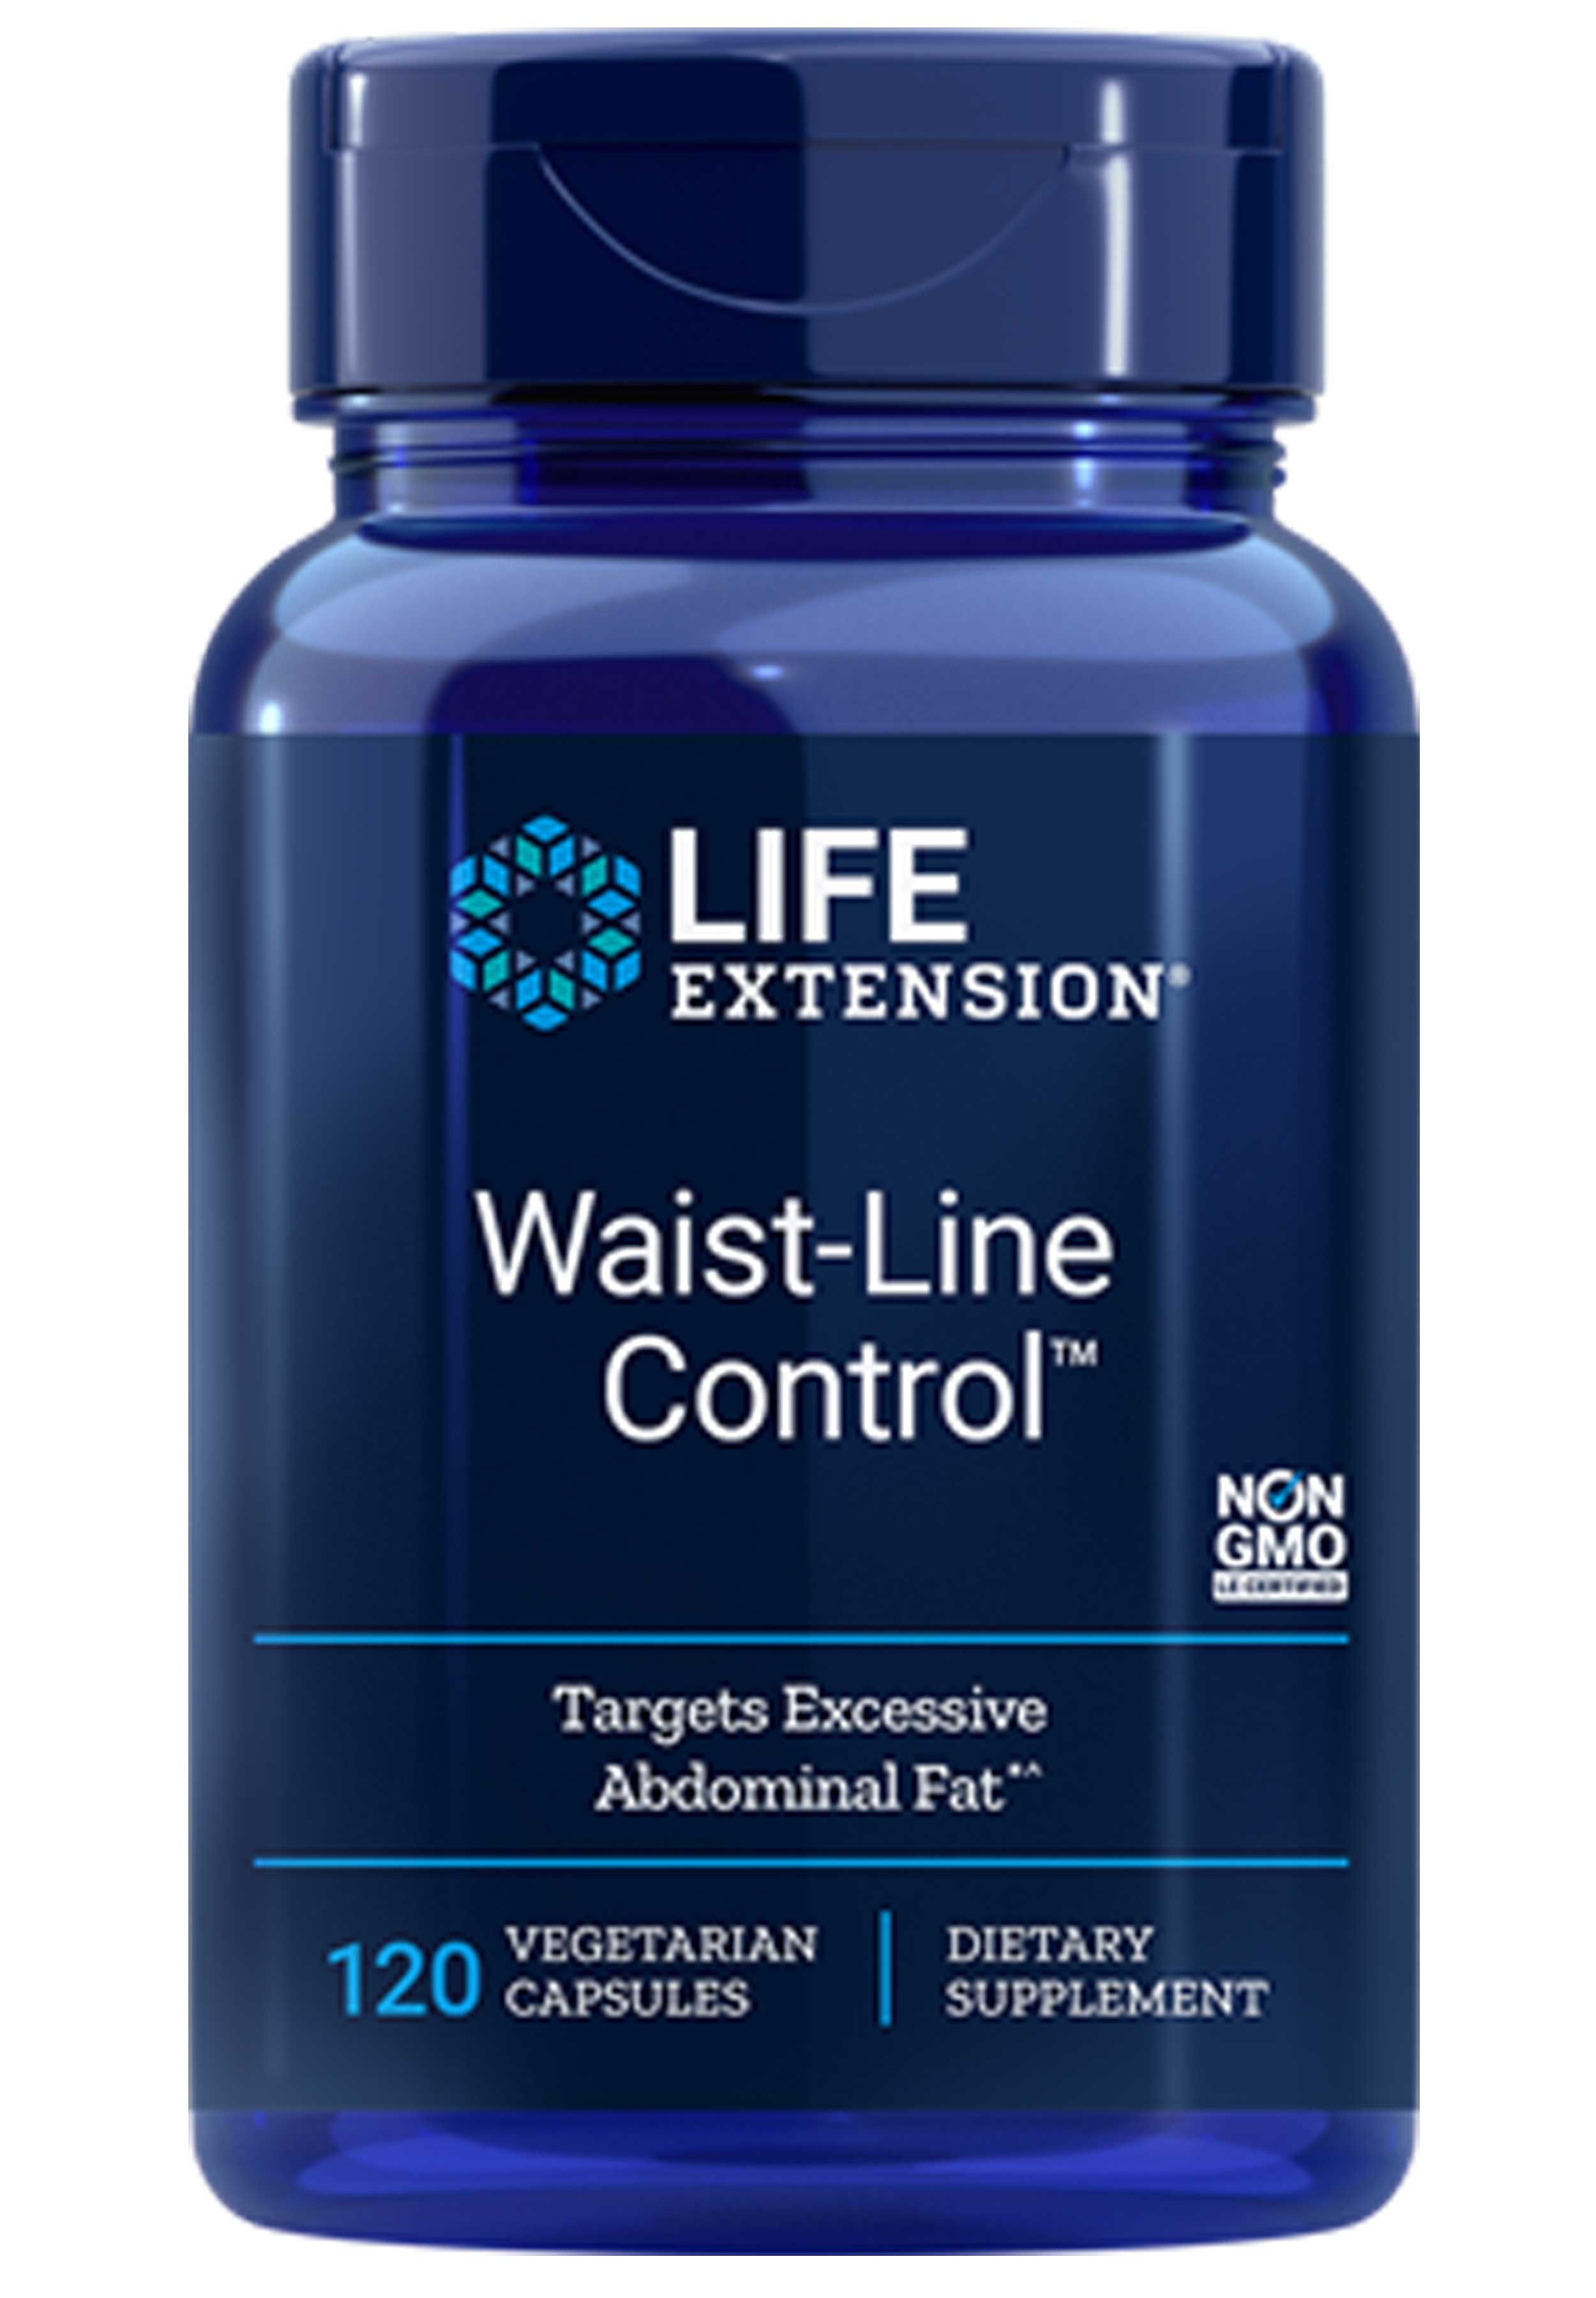 Life Extension Waist-Line Control